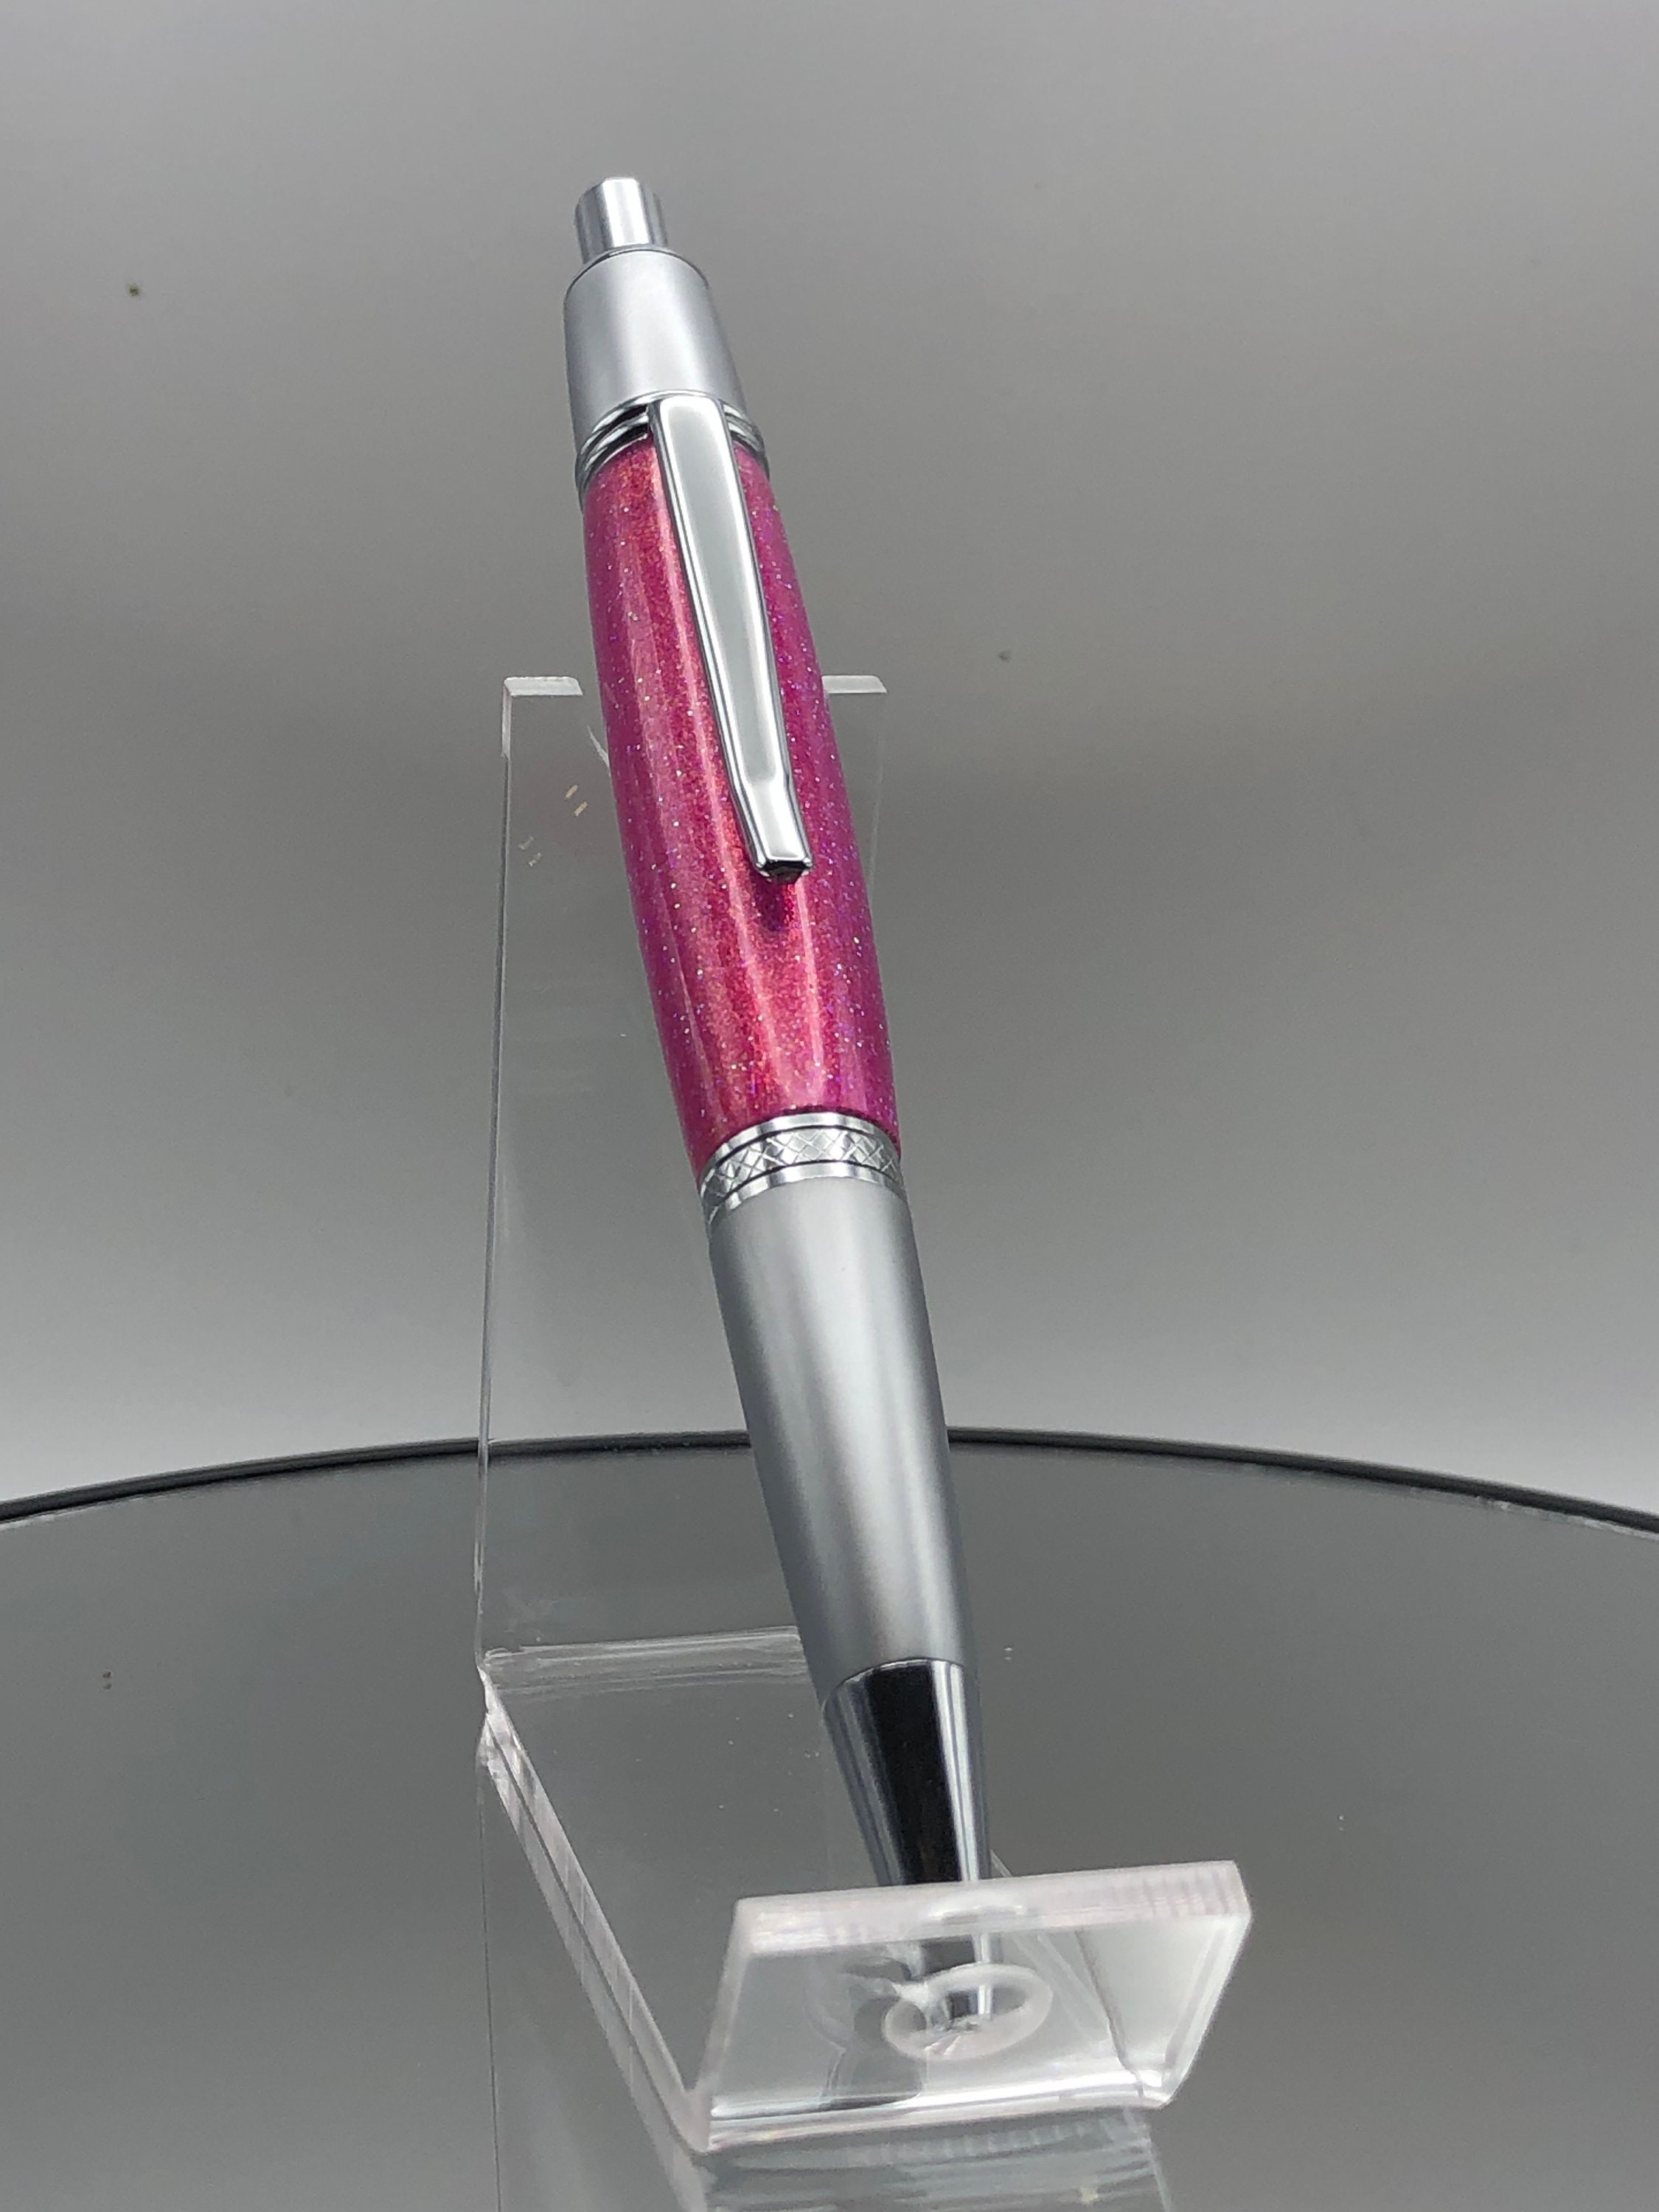 Pentel Fude Touch Brush Sign Pen 12 Colors BOX SET 